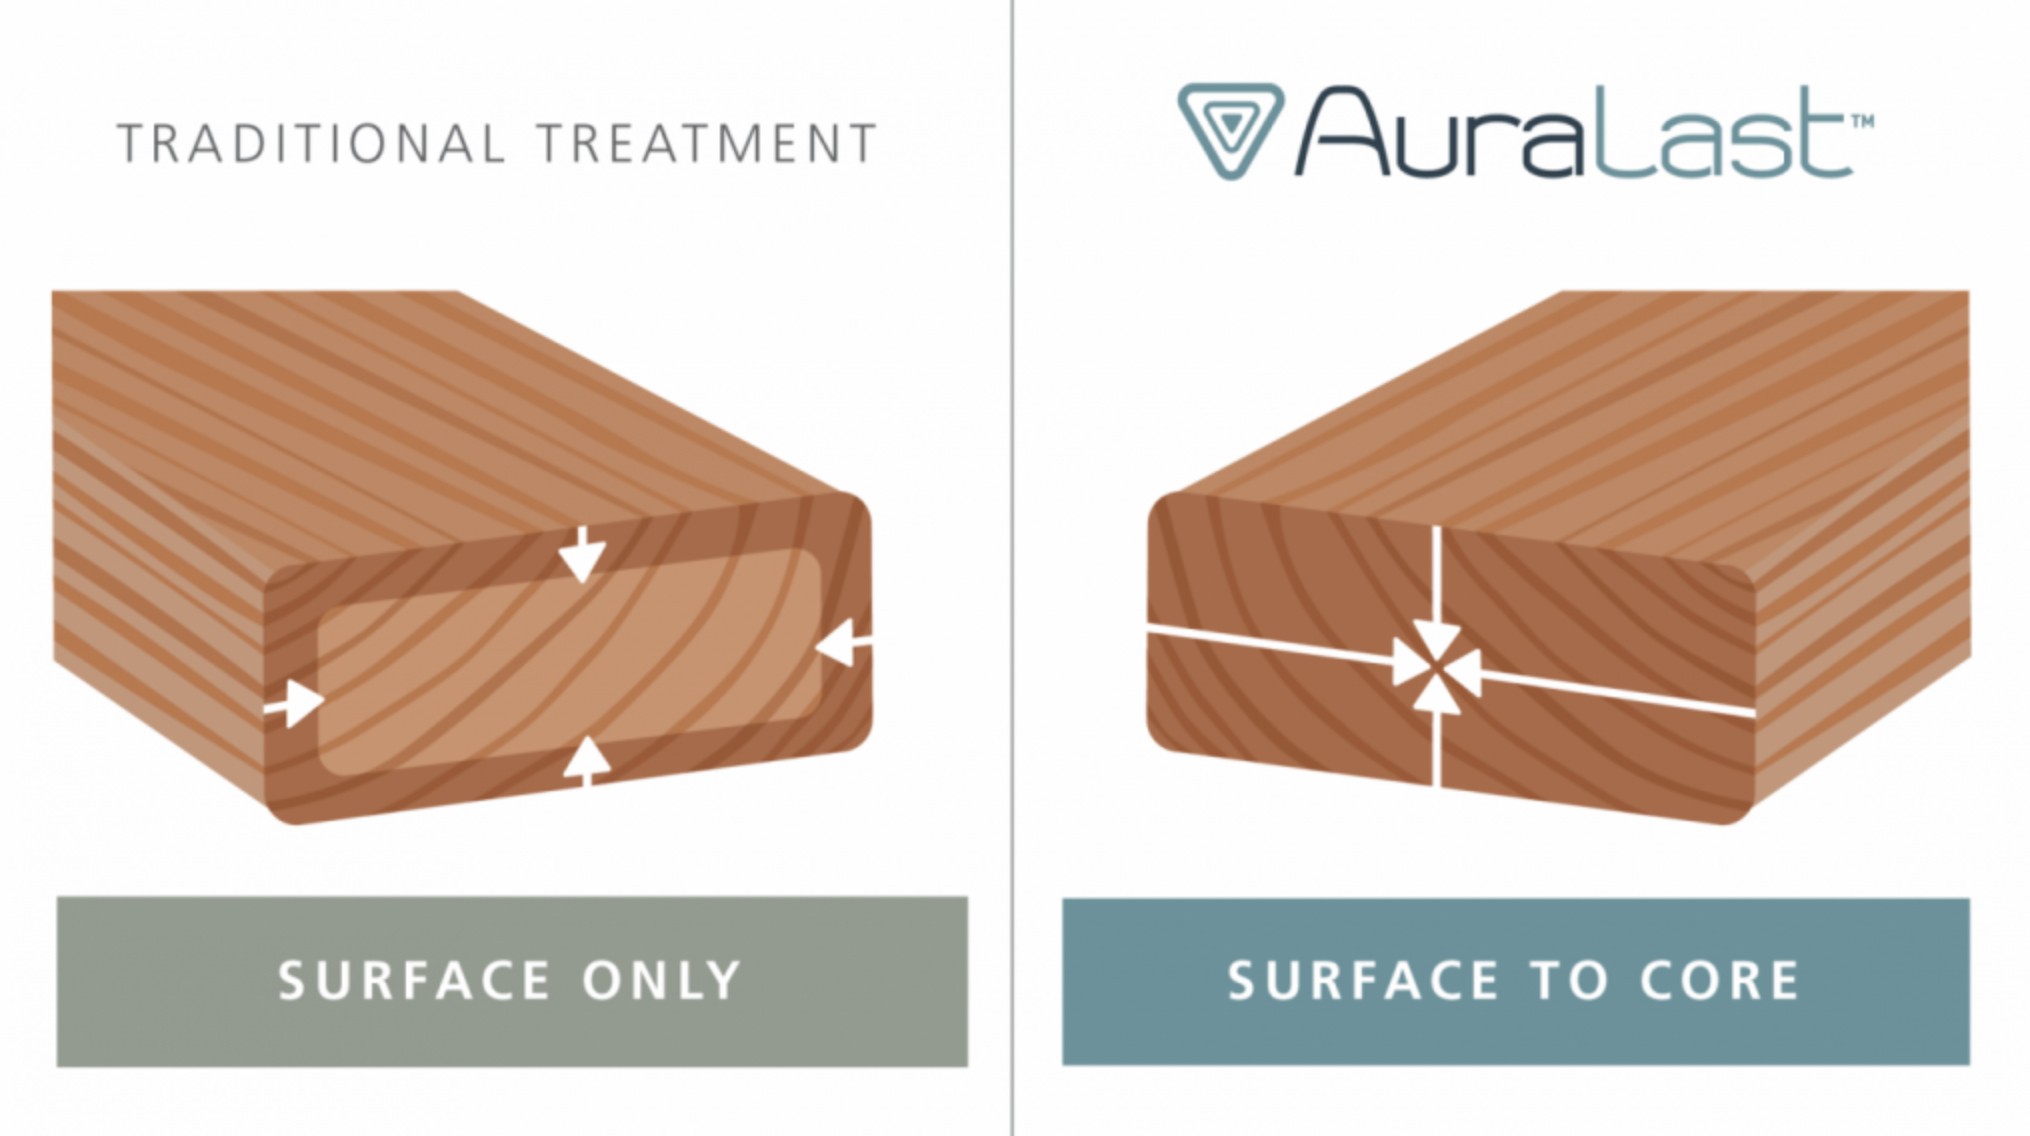 Auralast Wood Surface